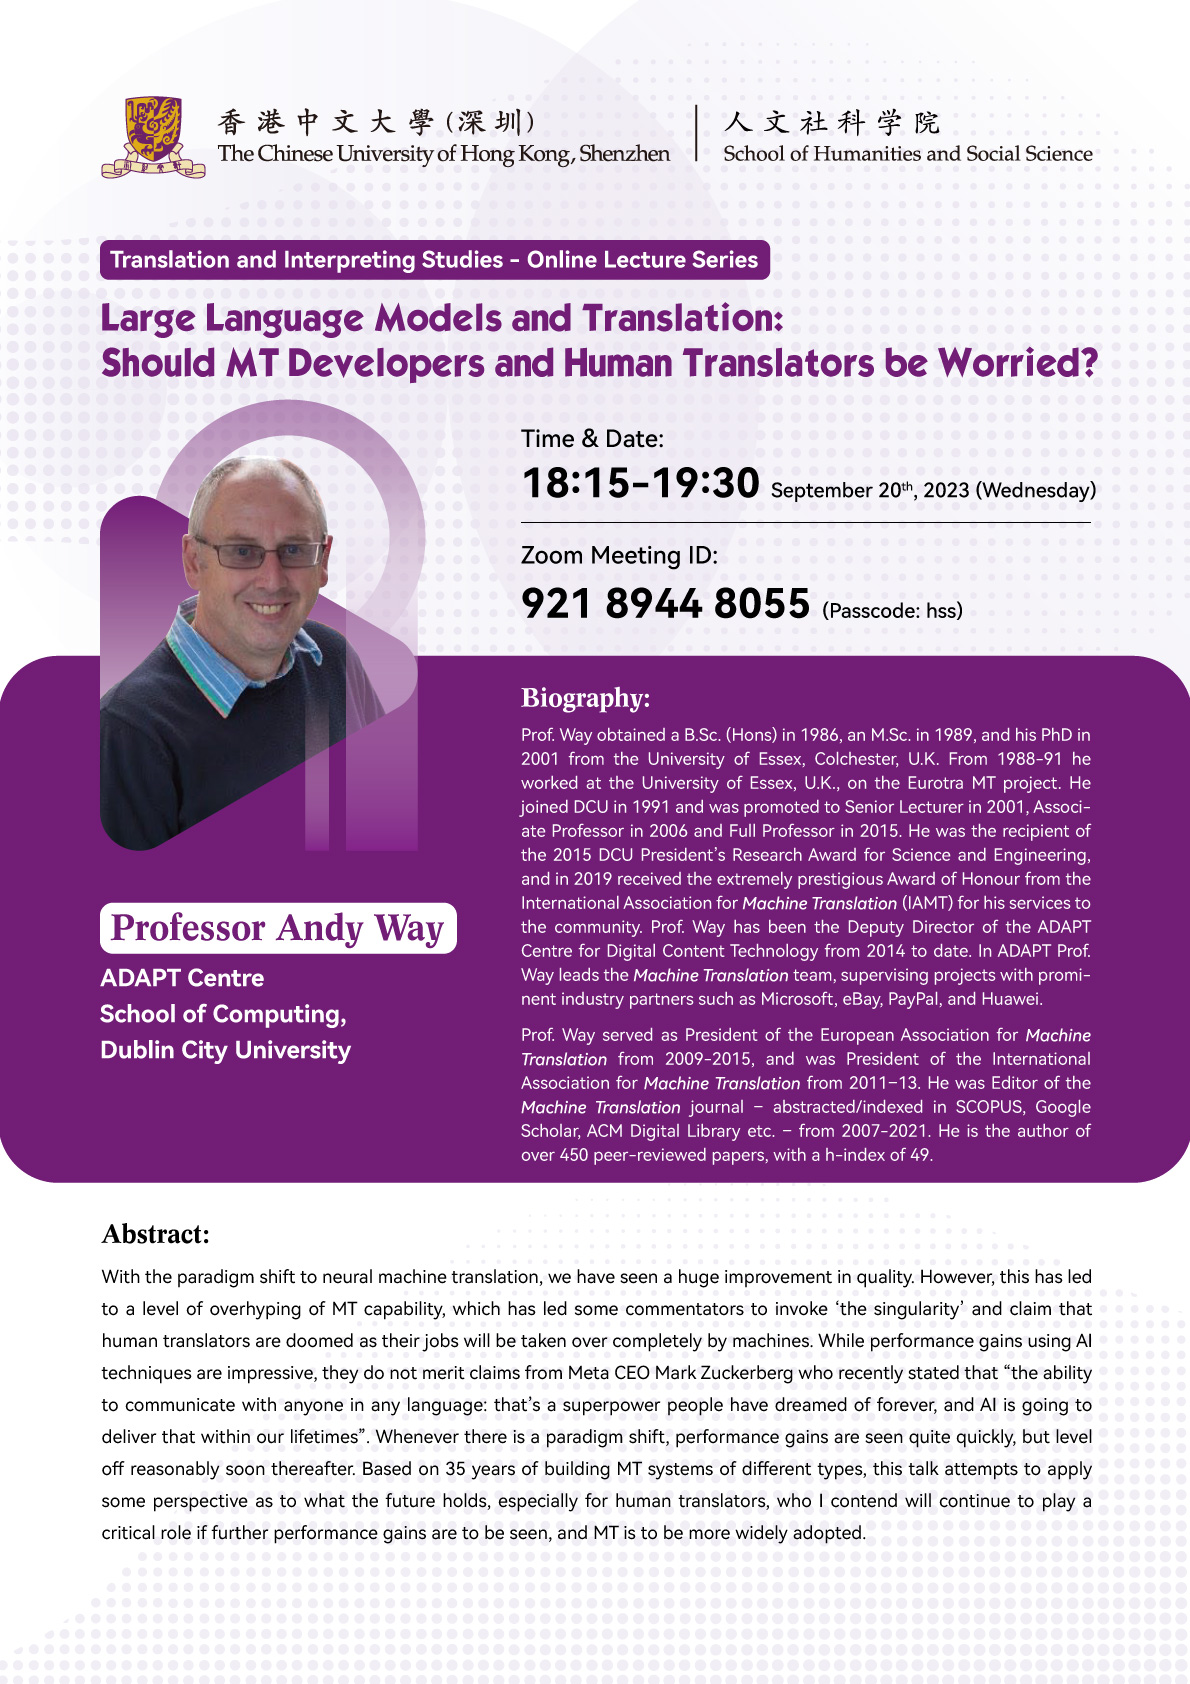 Large Language Models and Translation: Should MT Developers and Human Translators be Worried